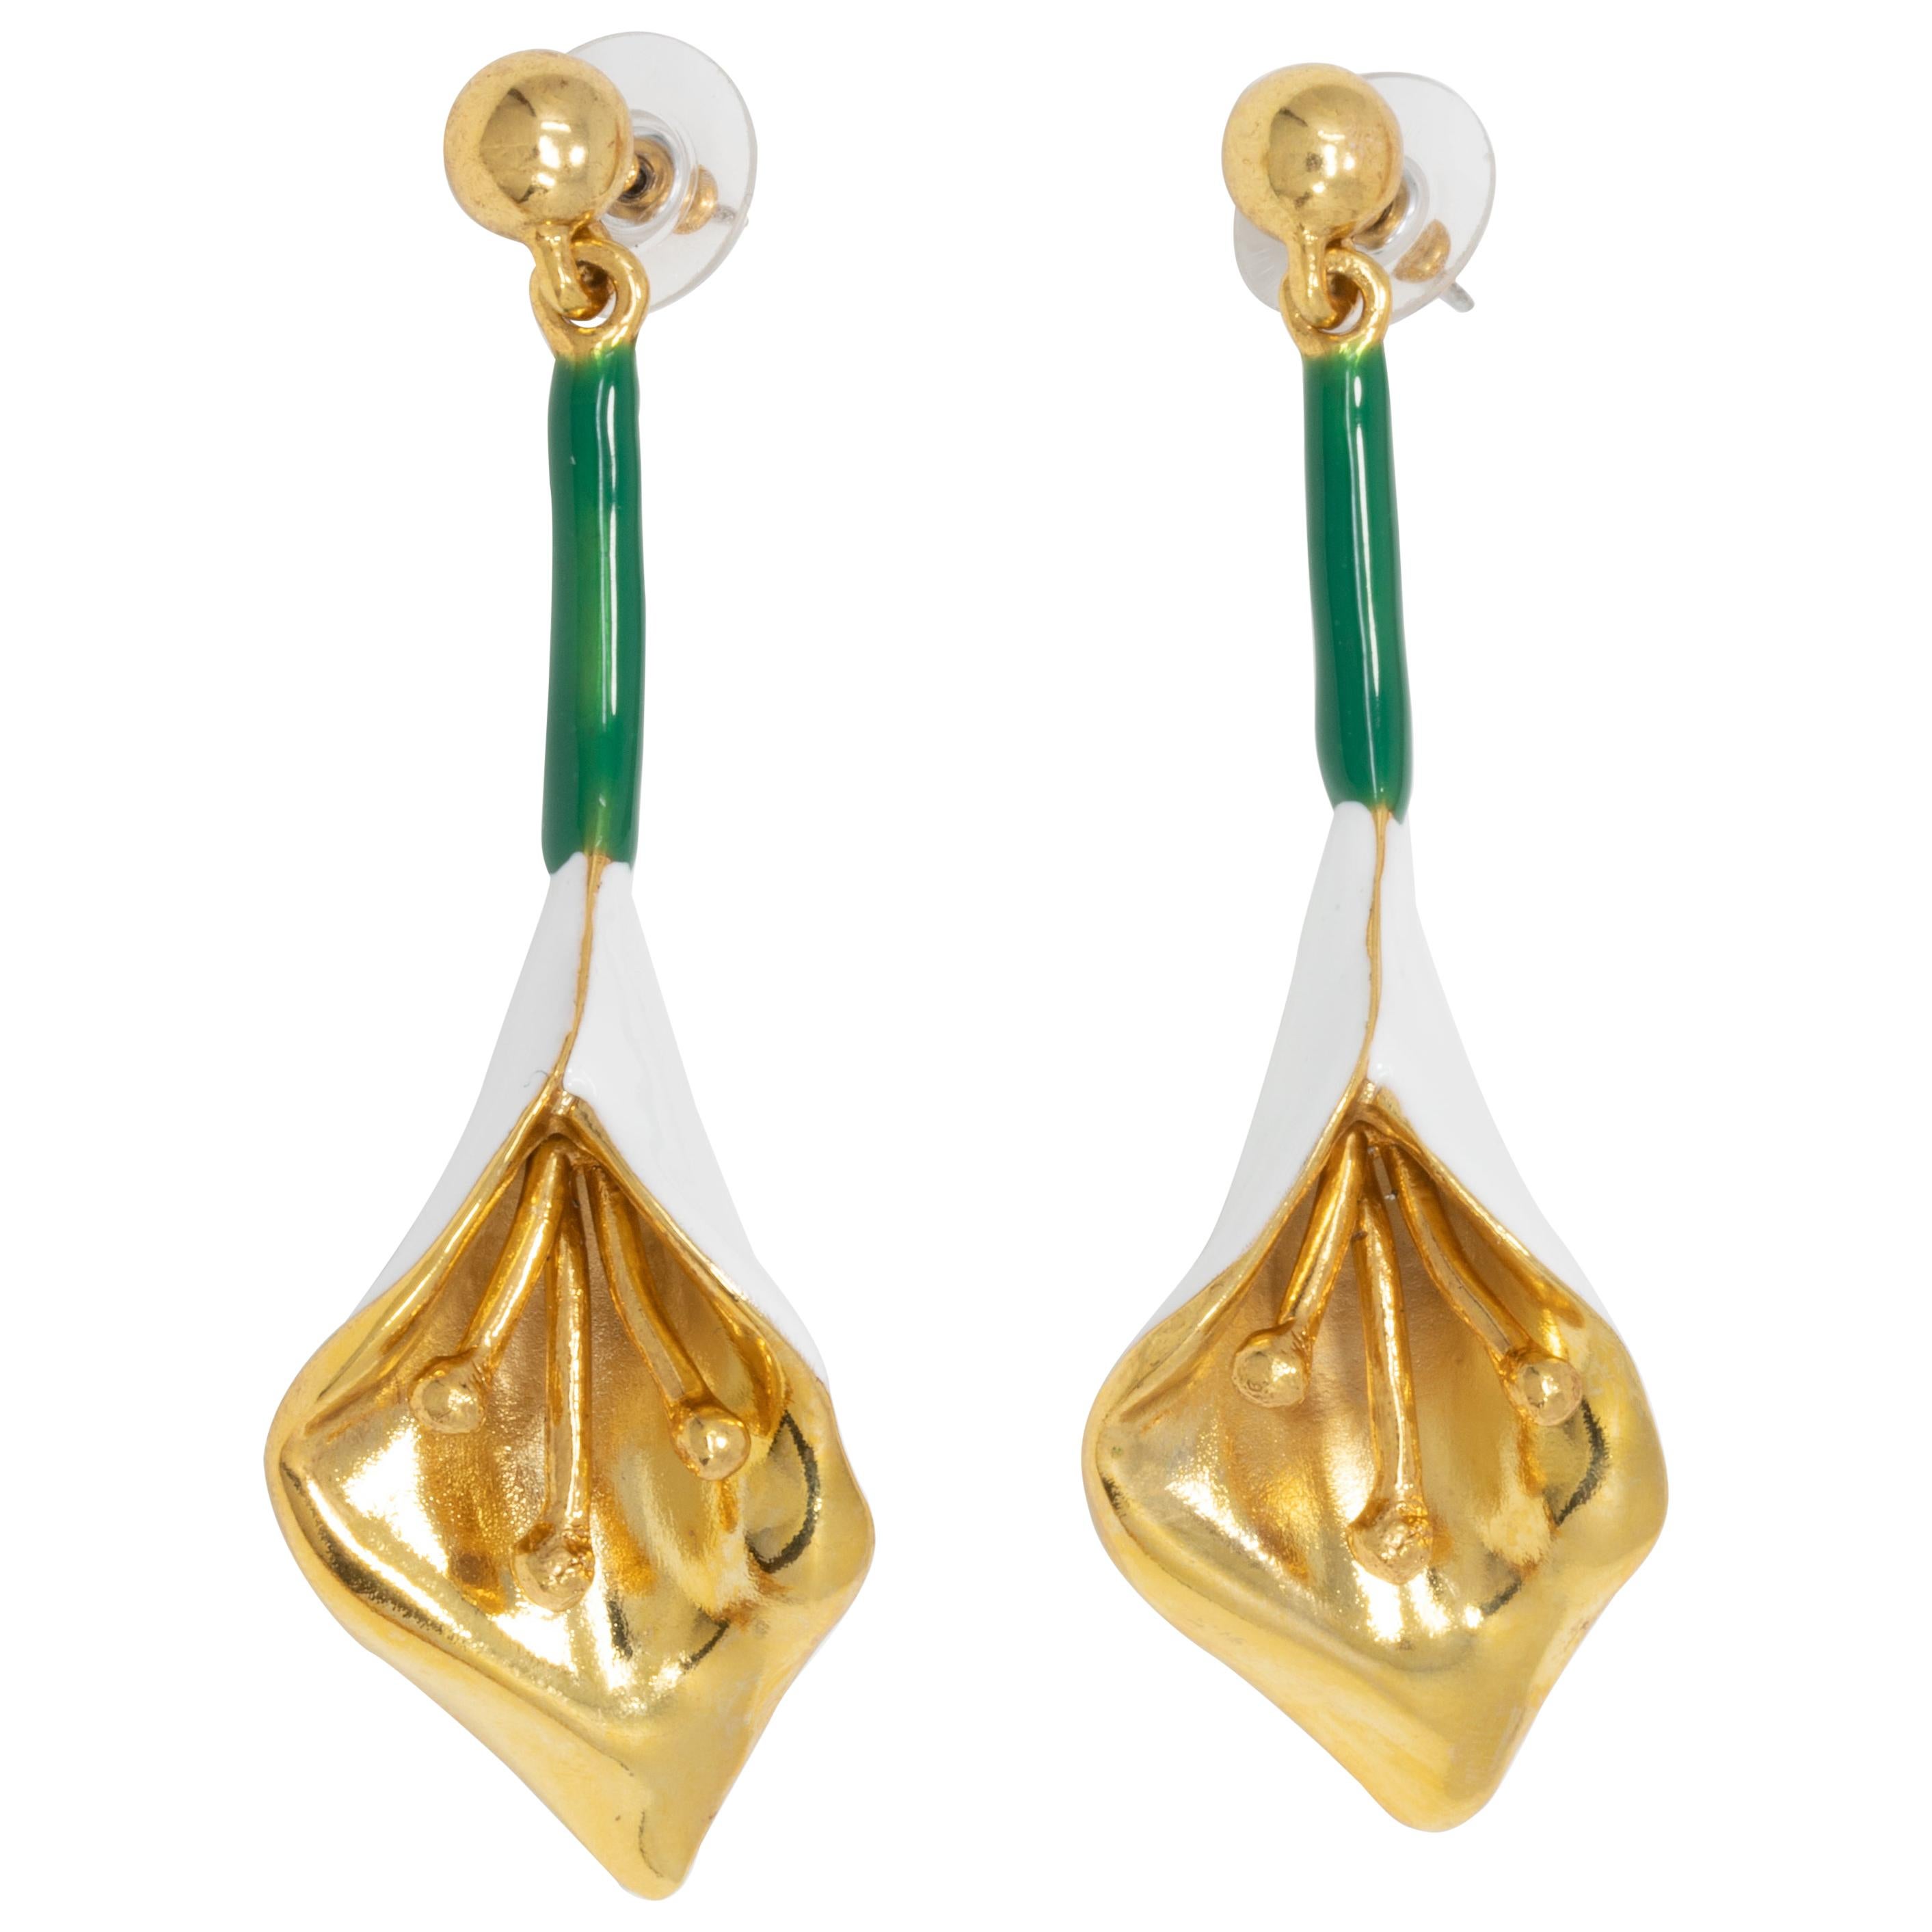 Oscar de la Renta Gold Calla Lily Dangle Earrings, White and Green Enamel